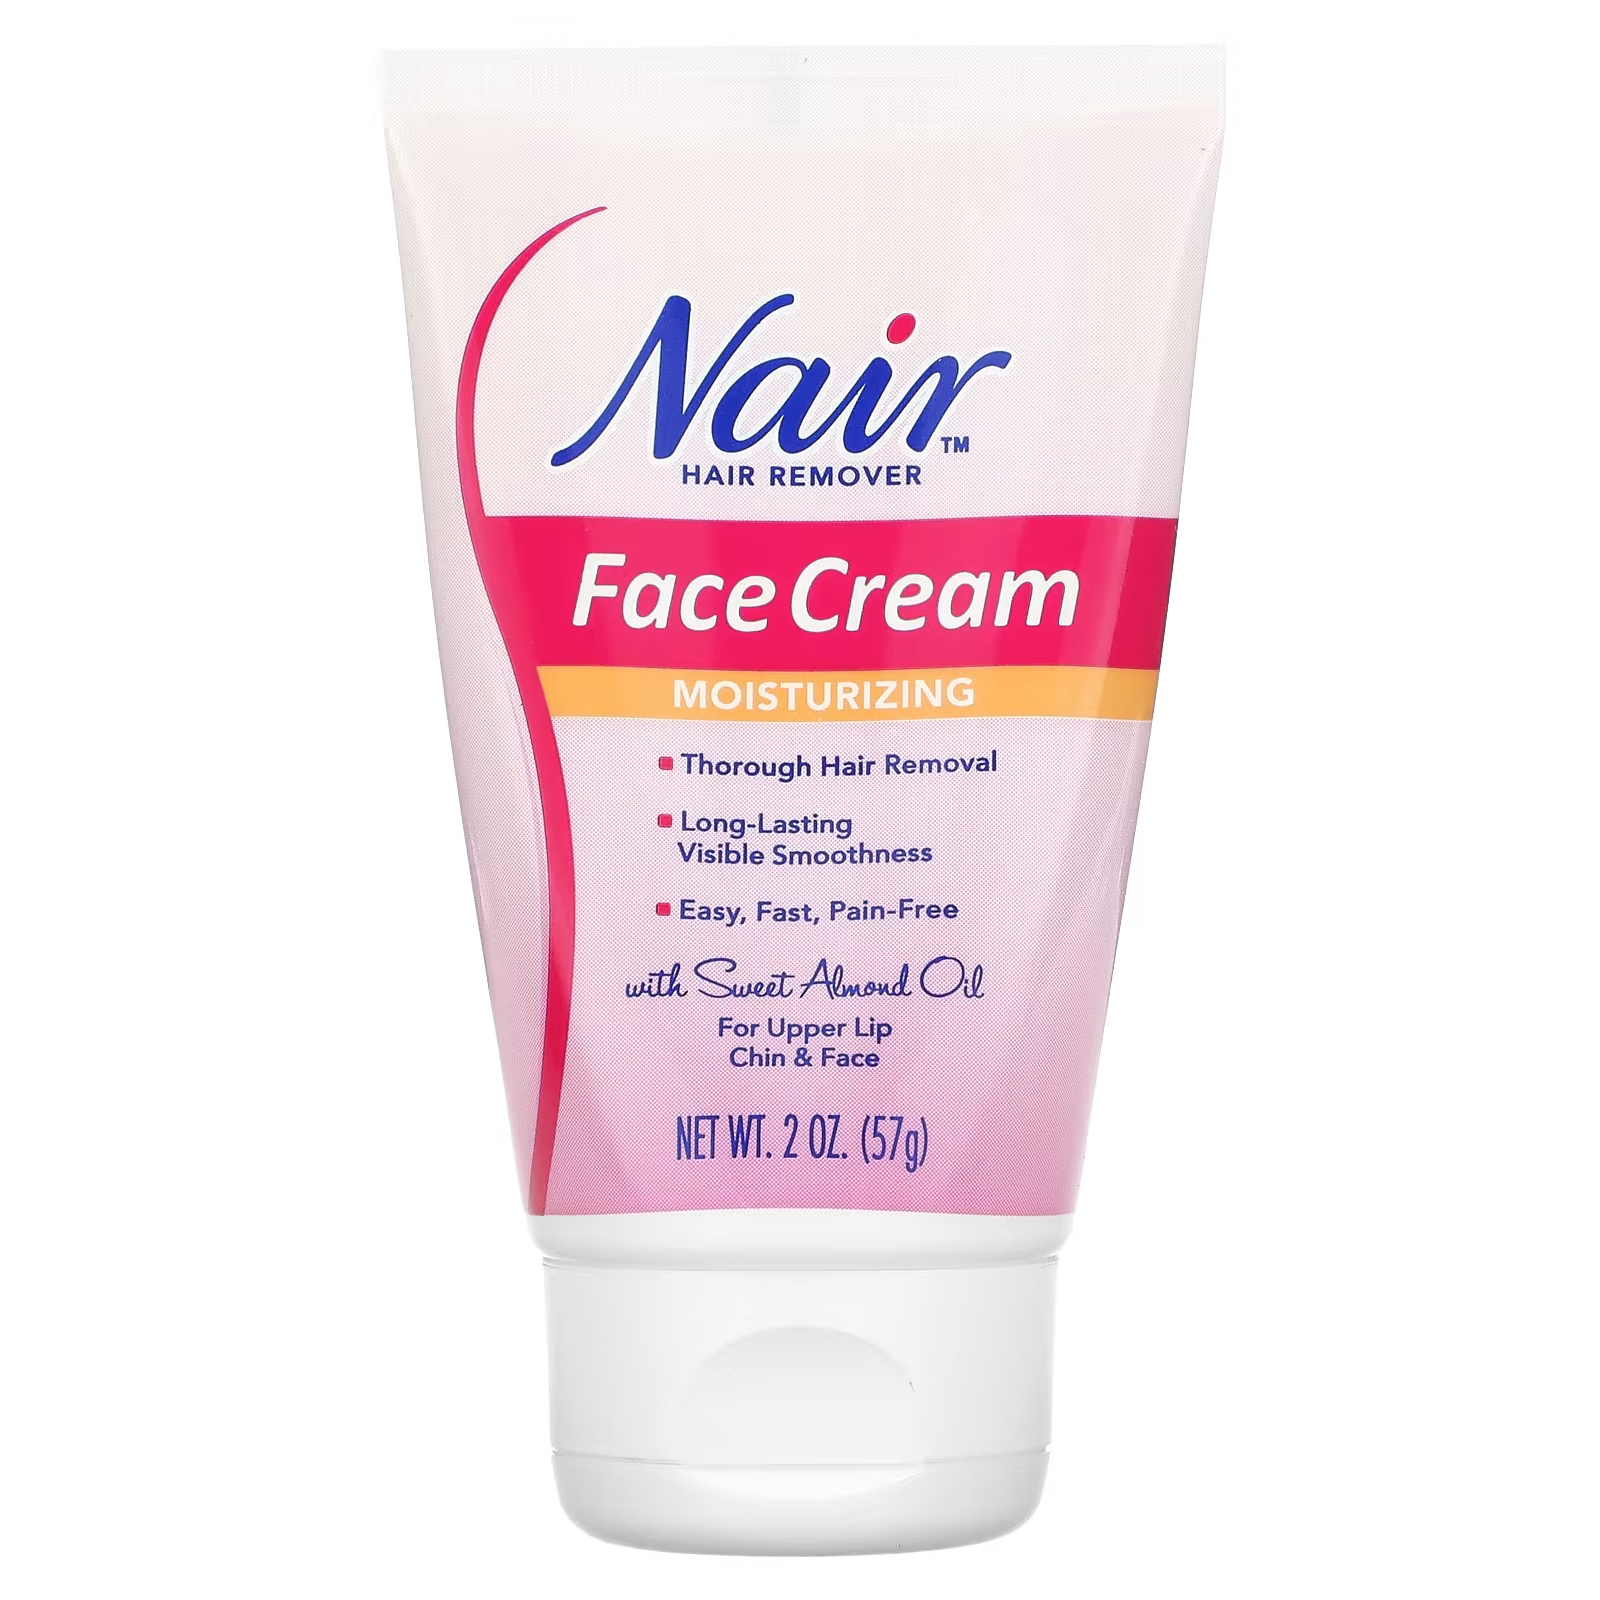 nair hair remover moisturizing face cream 2 oz 57 g Увлажняющий крем для лица Nair Hair Remover для лица, 57 г